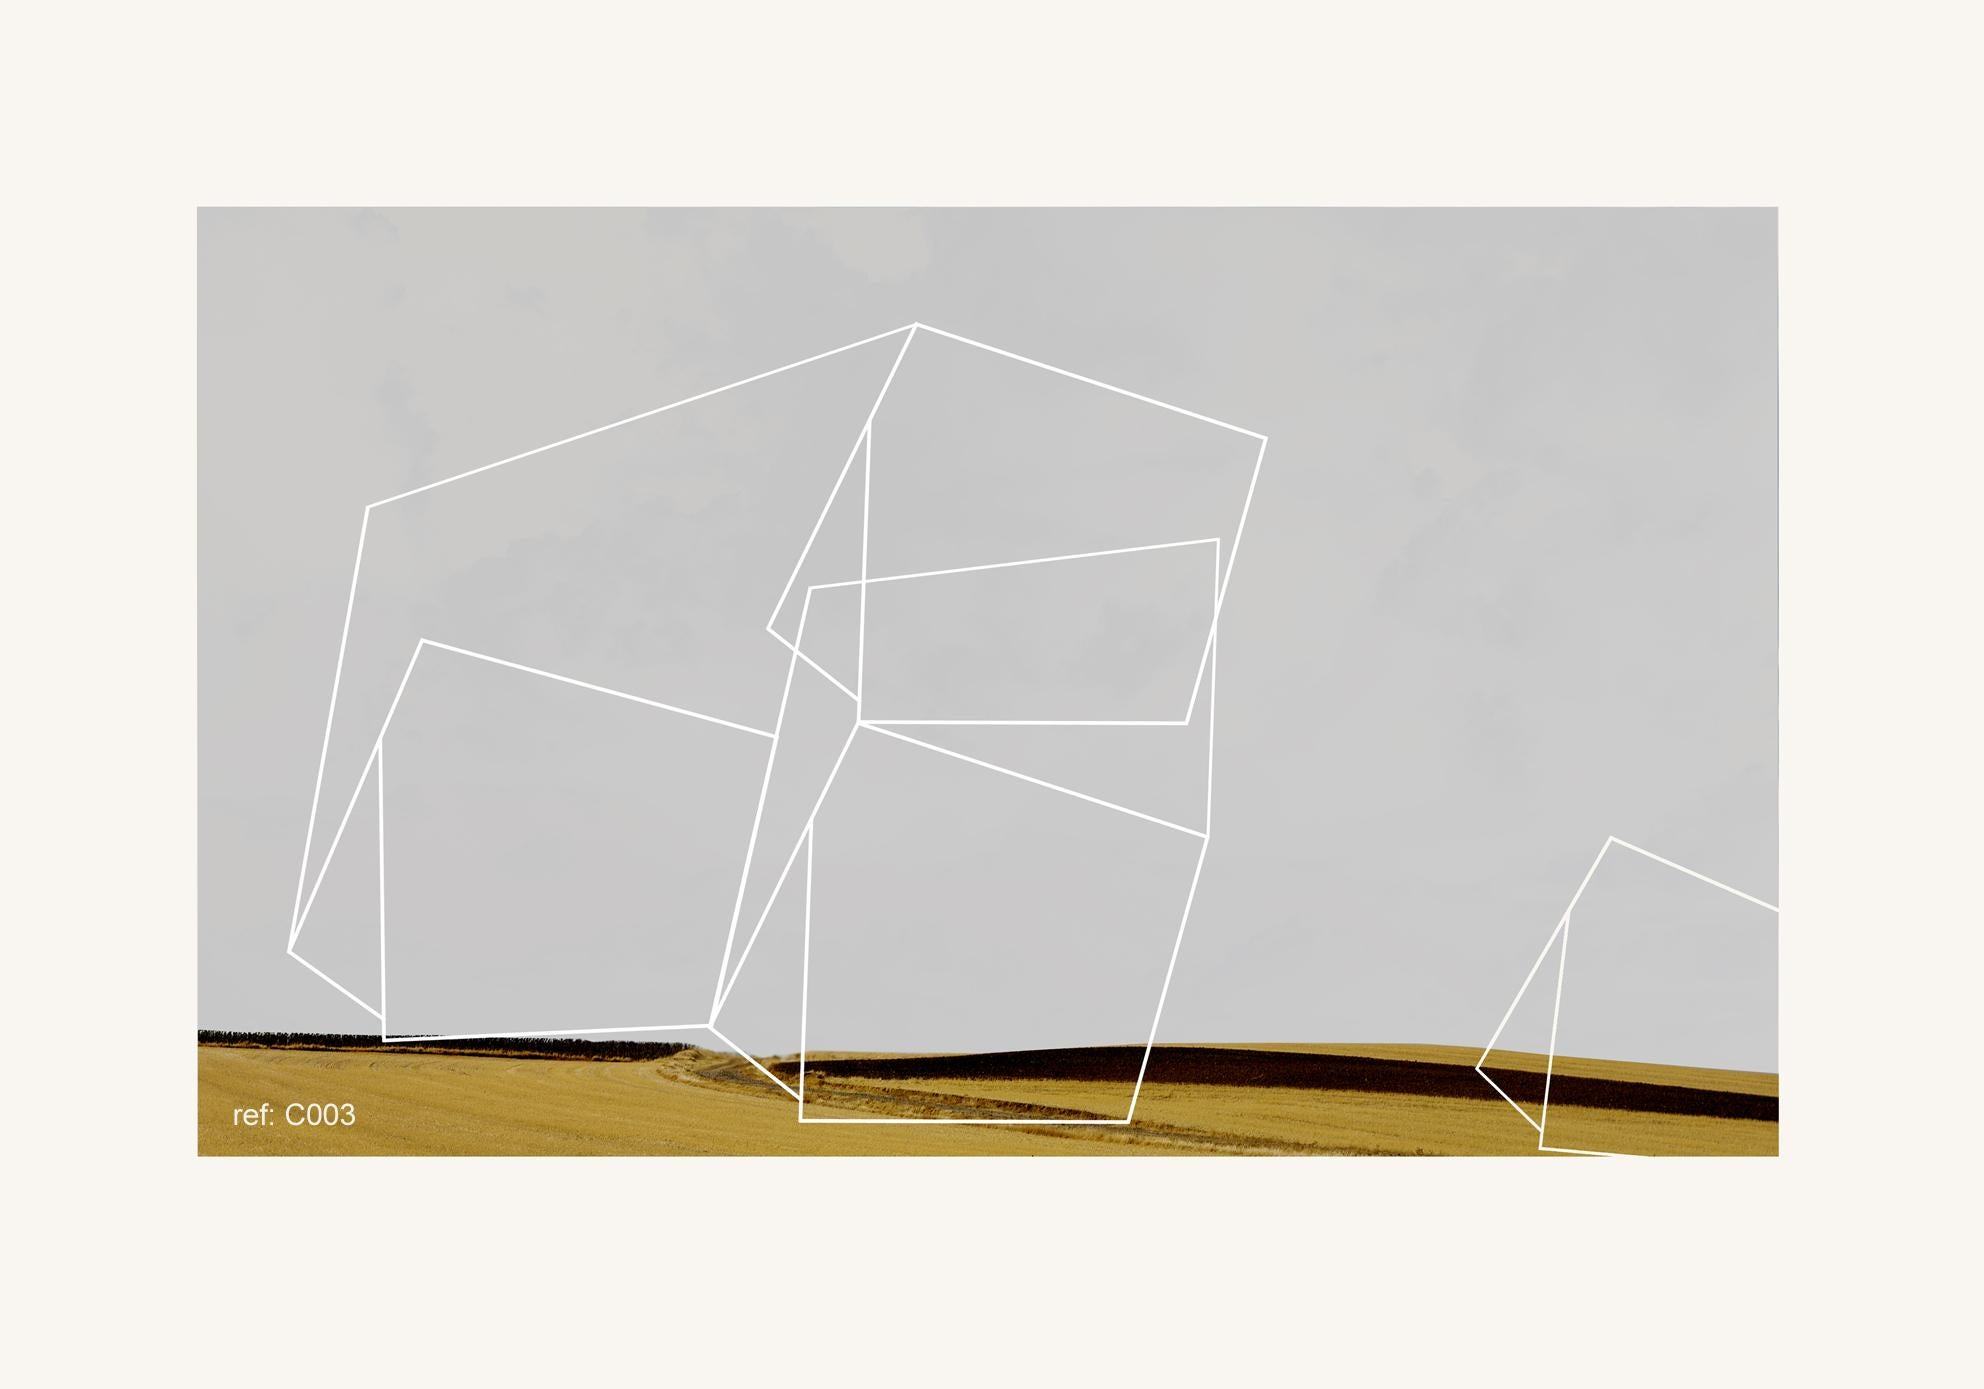 Francisco Nicolás Abstract Print - Cuenca V - Contemporary, Abstract, Pop art, Surrealist, geometric, landscape 